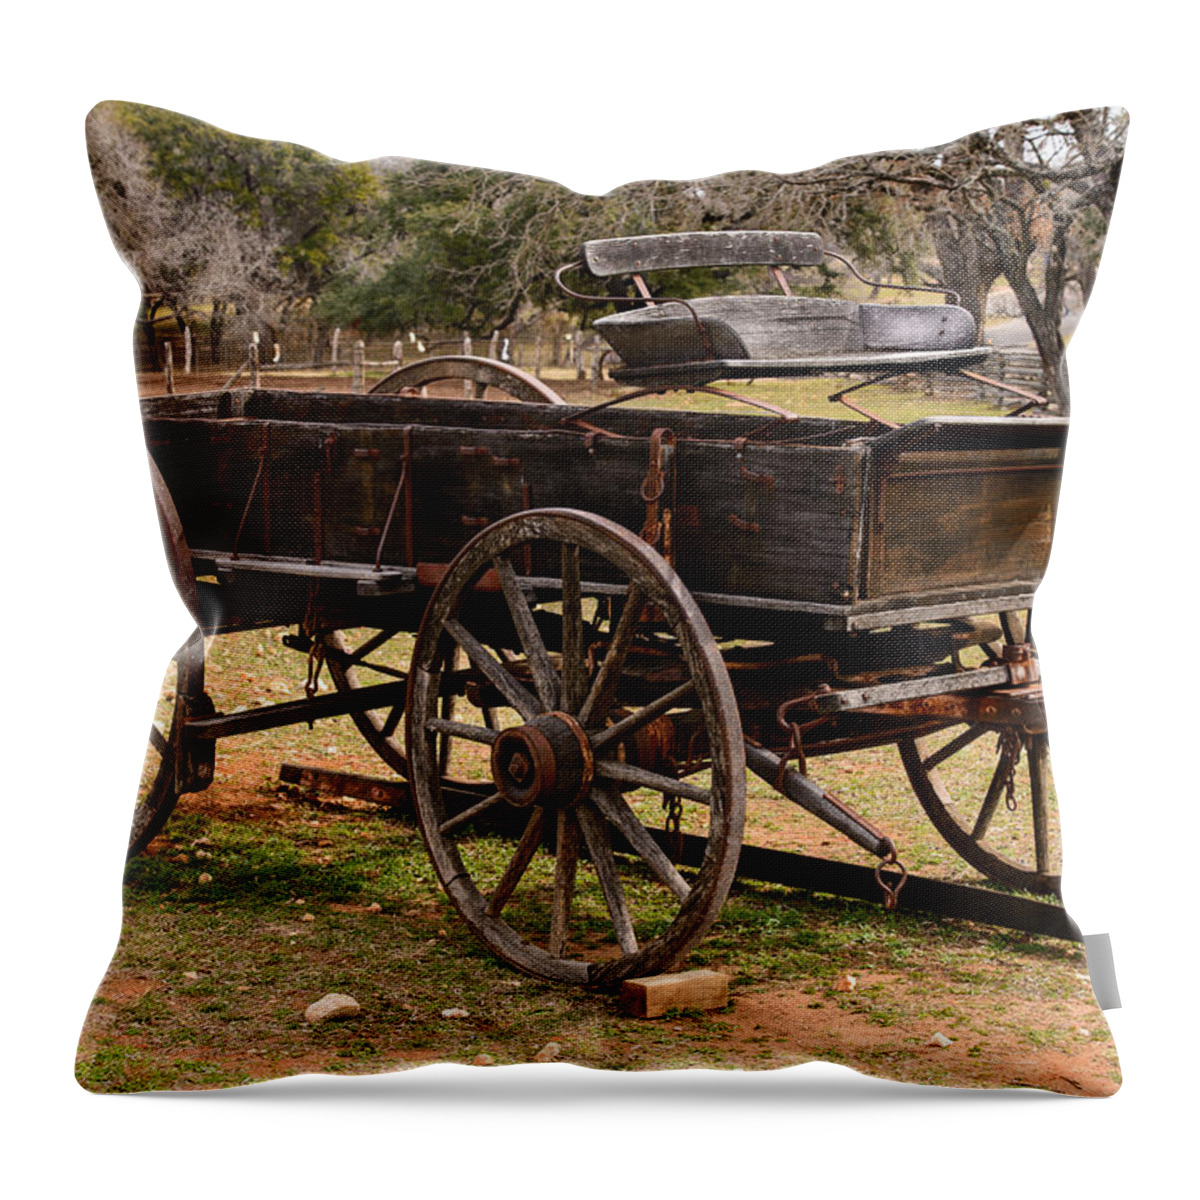 Lbj Ranch Throw Pillow featuring the photograph Wooden Cart by John Johnson